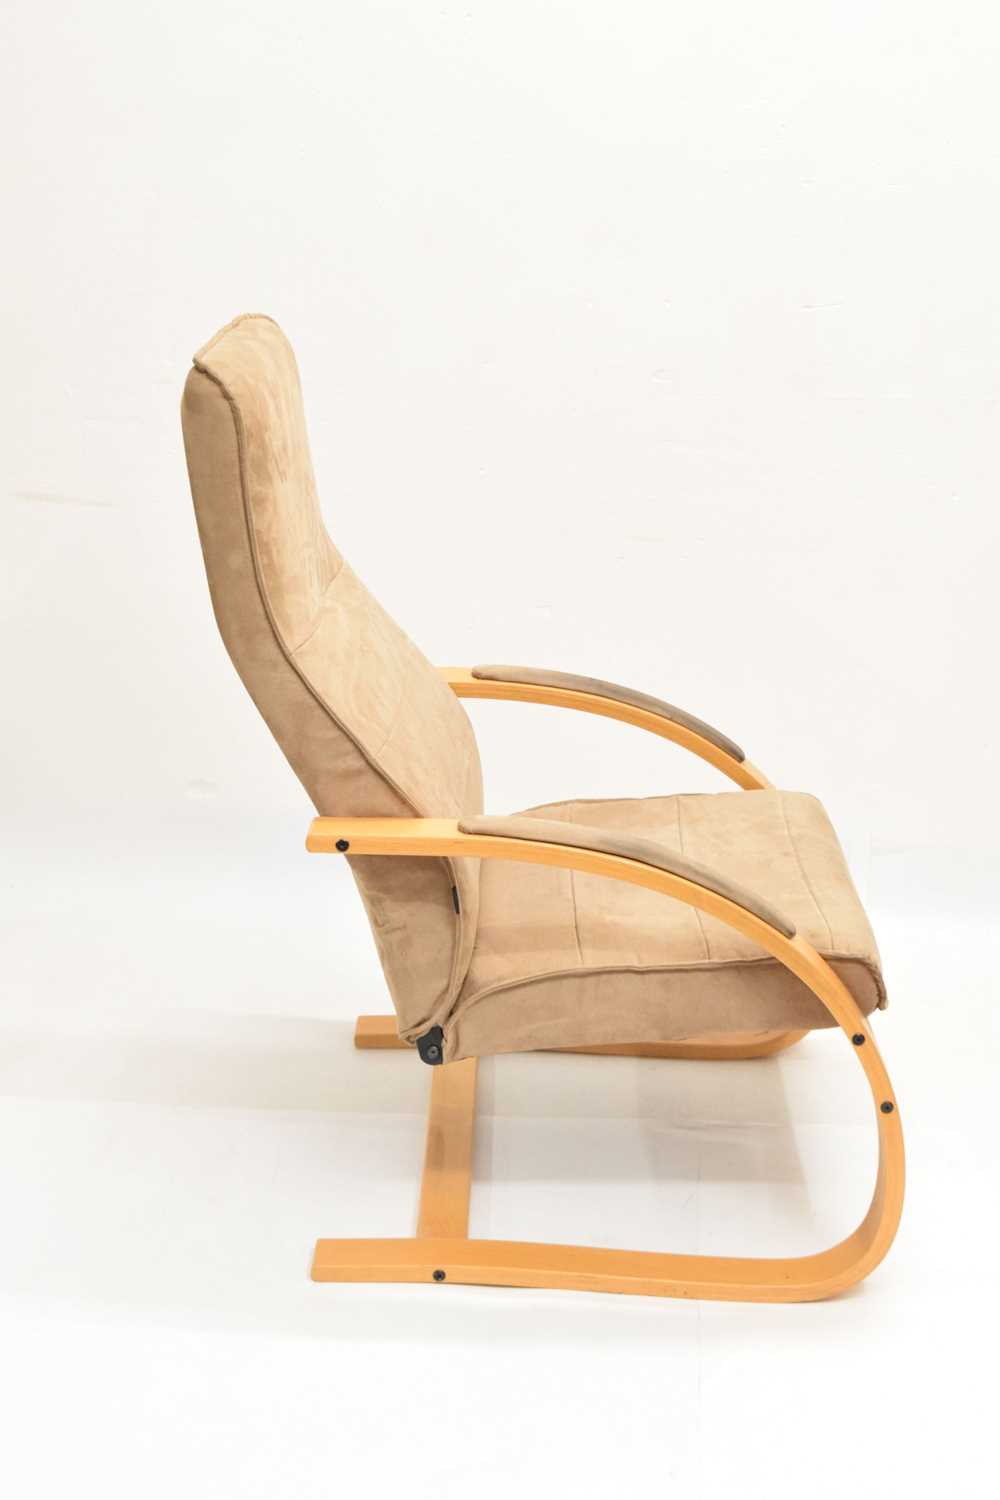 Contemporary Verikon (Denmark) armchair - Image 7 of 9